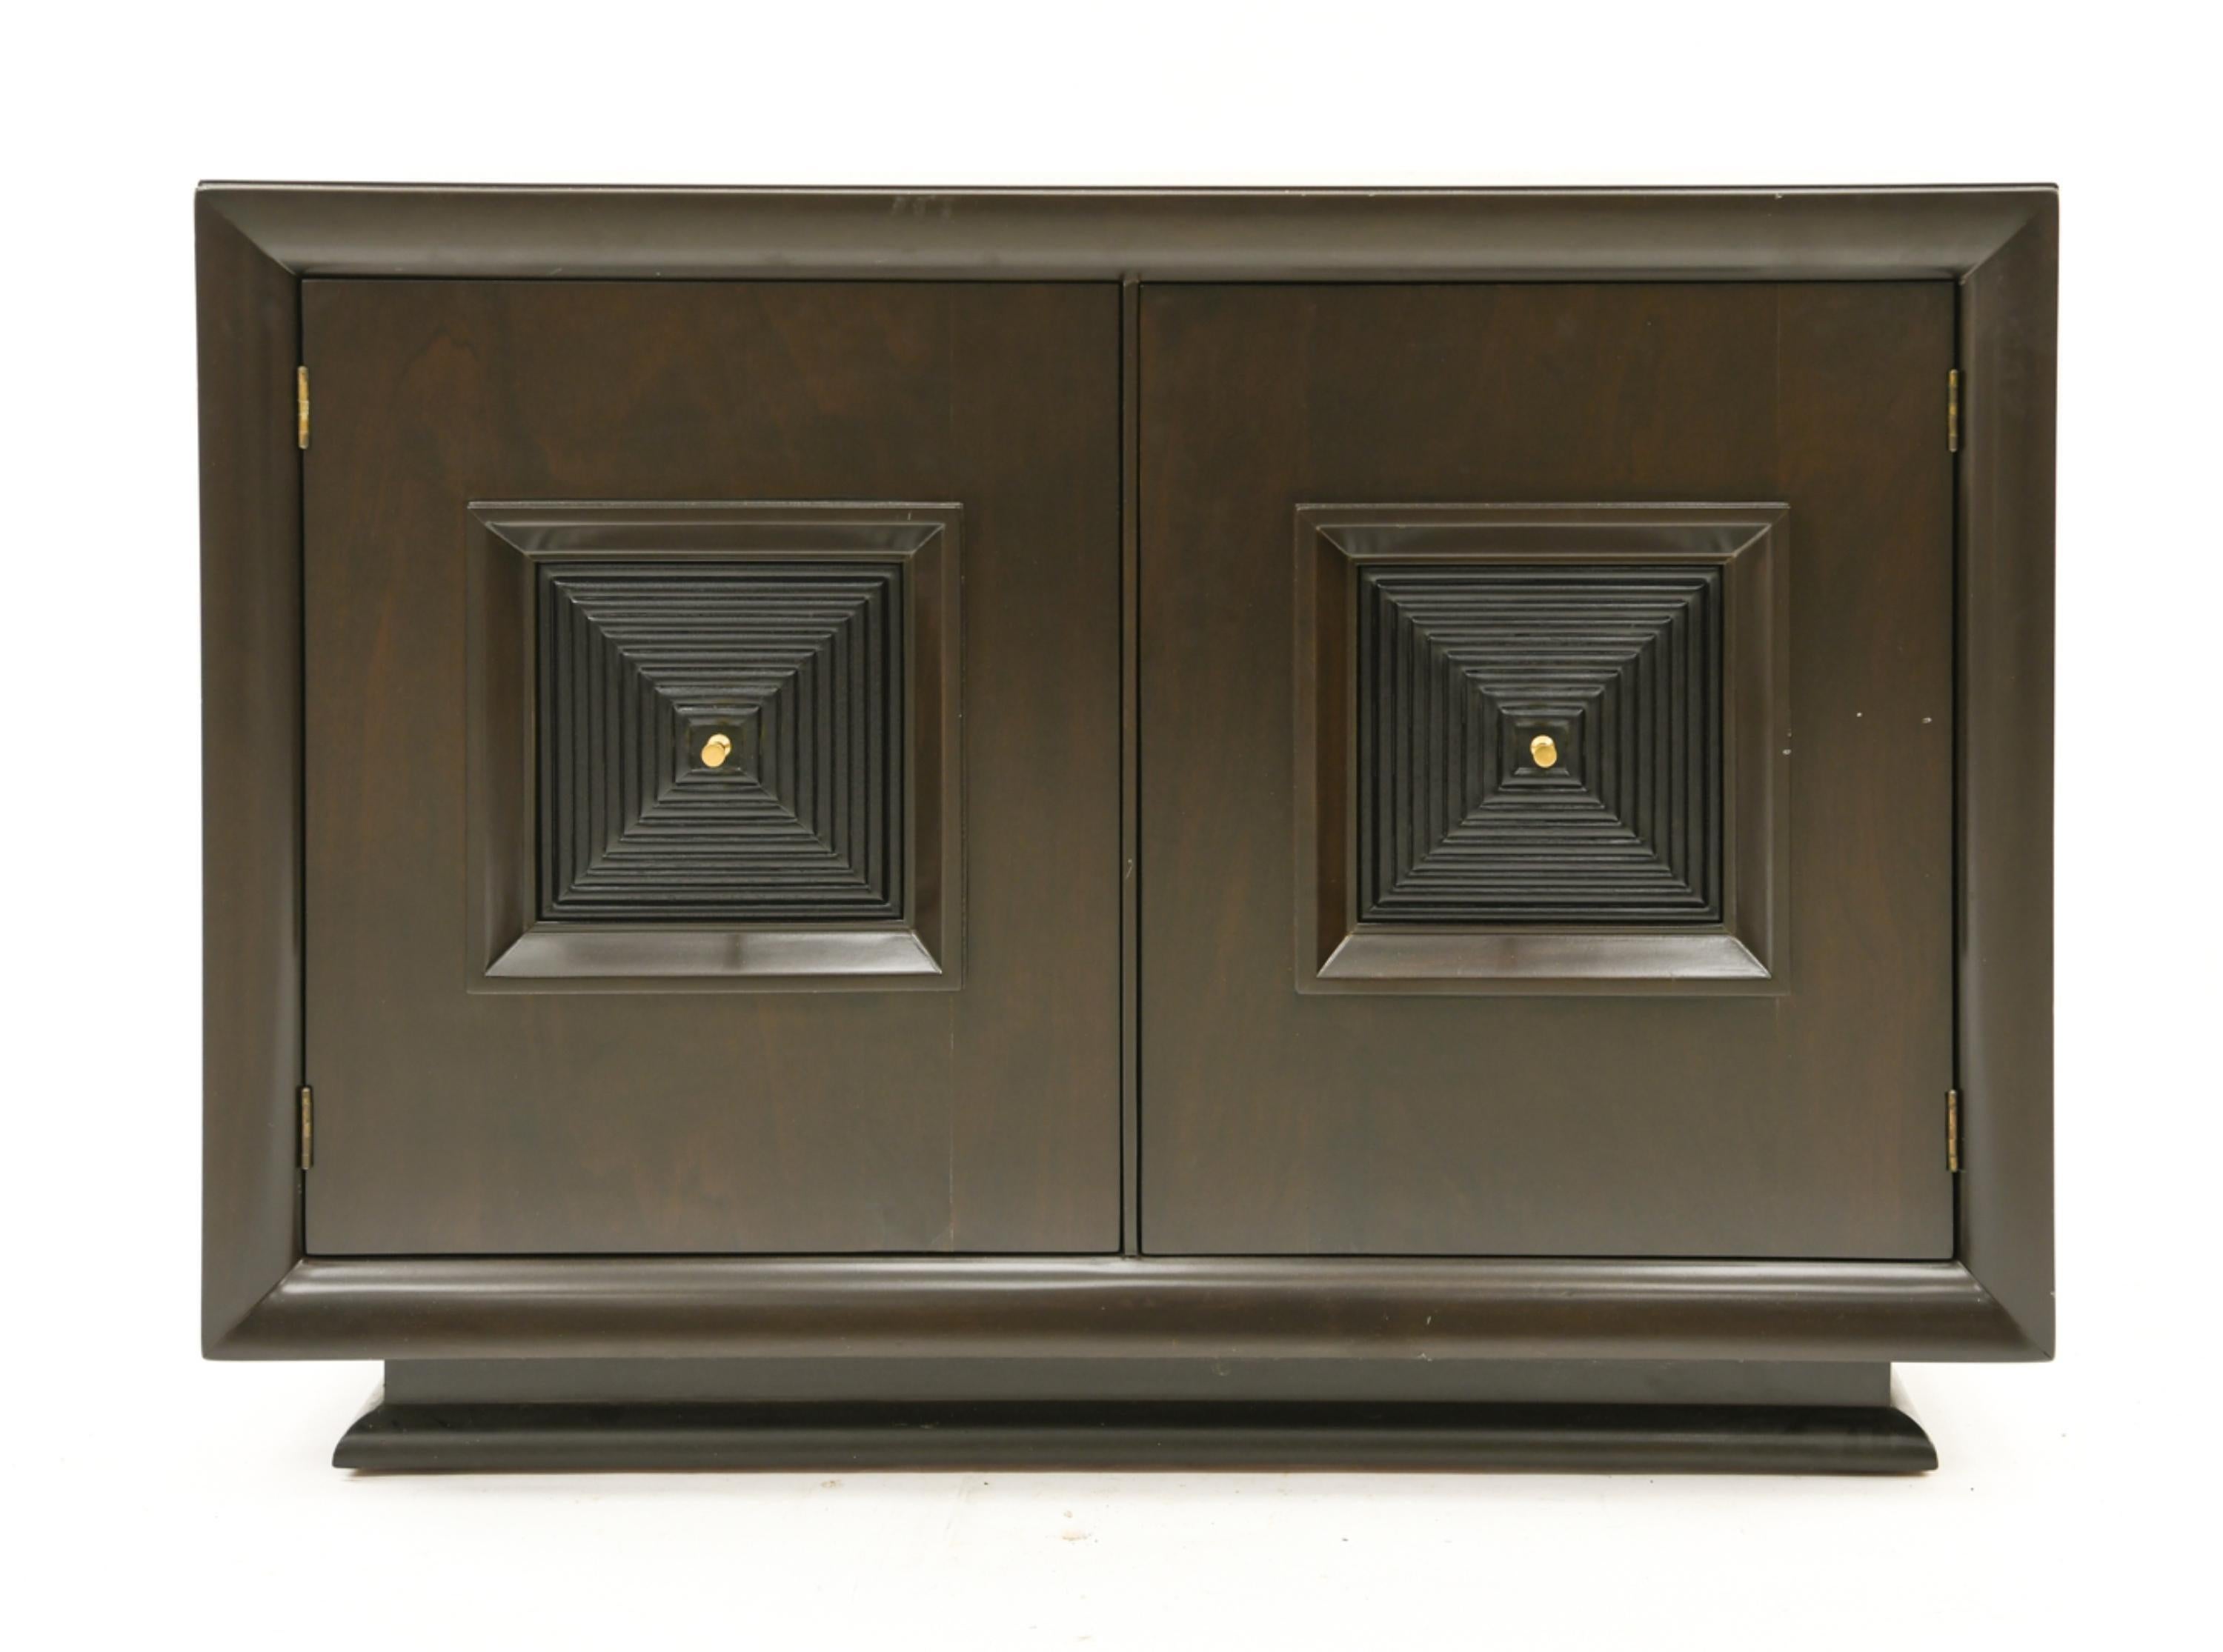 Wonderful Mid-Century Modern Lorin Marsh Geometric Pyramid double door cabinet sideboard server
Dimensions: H 29.25